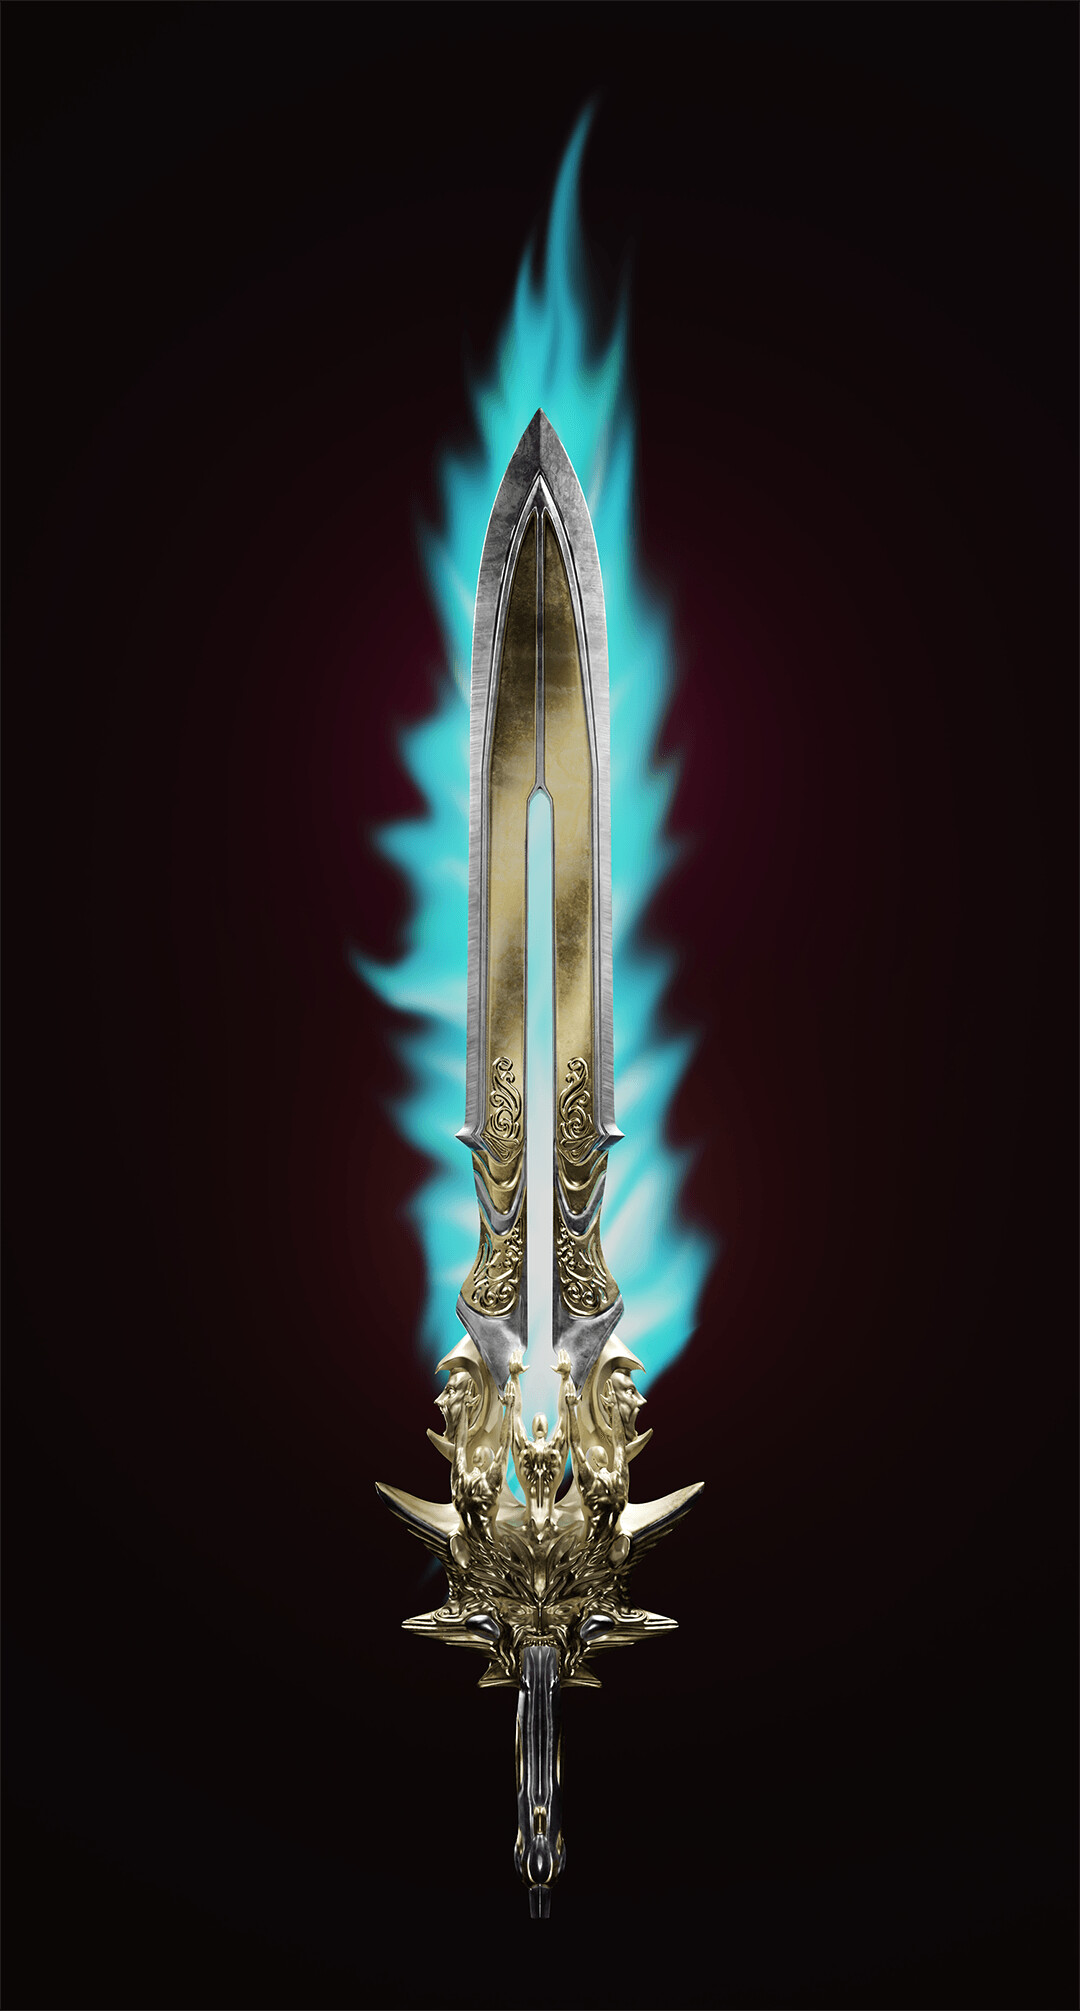 ArtStation - Blade of Olympus